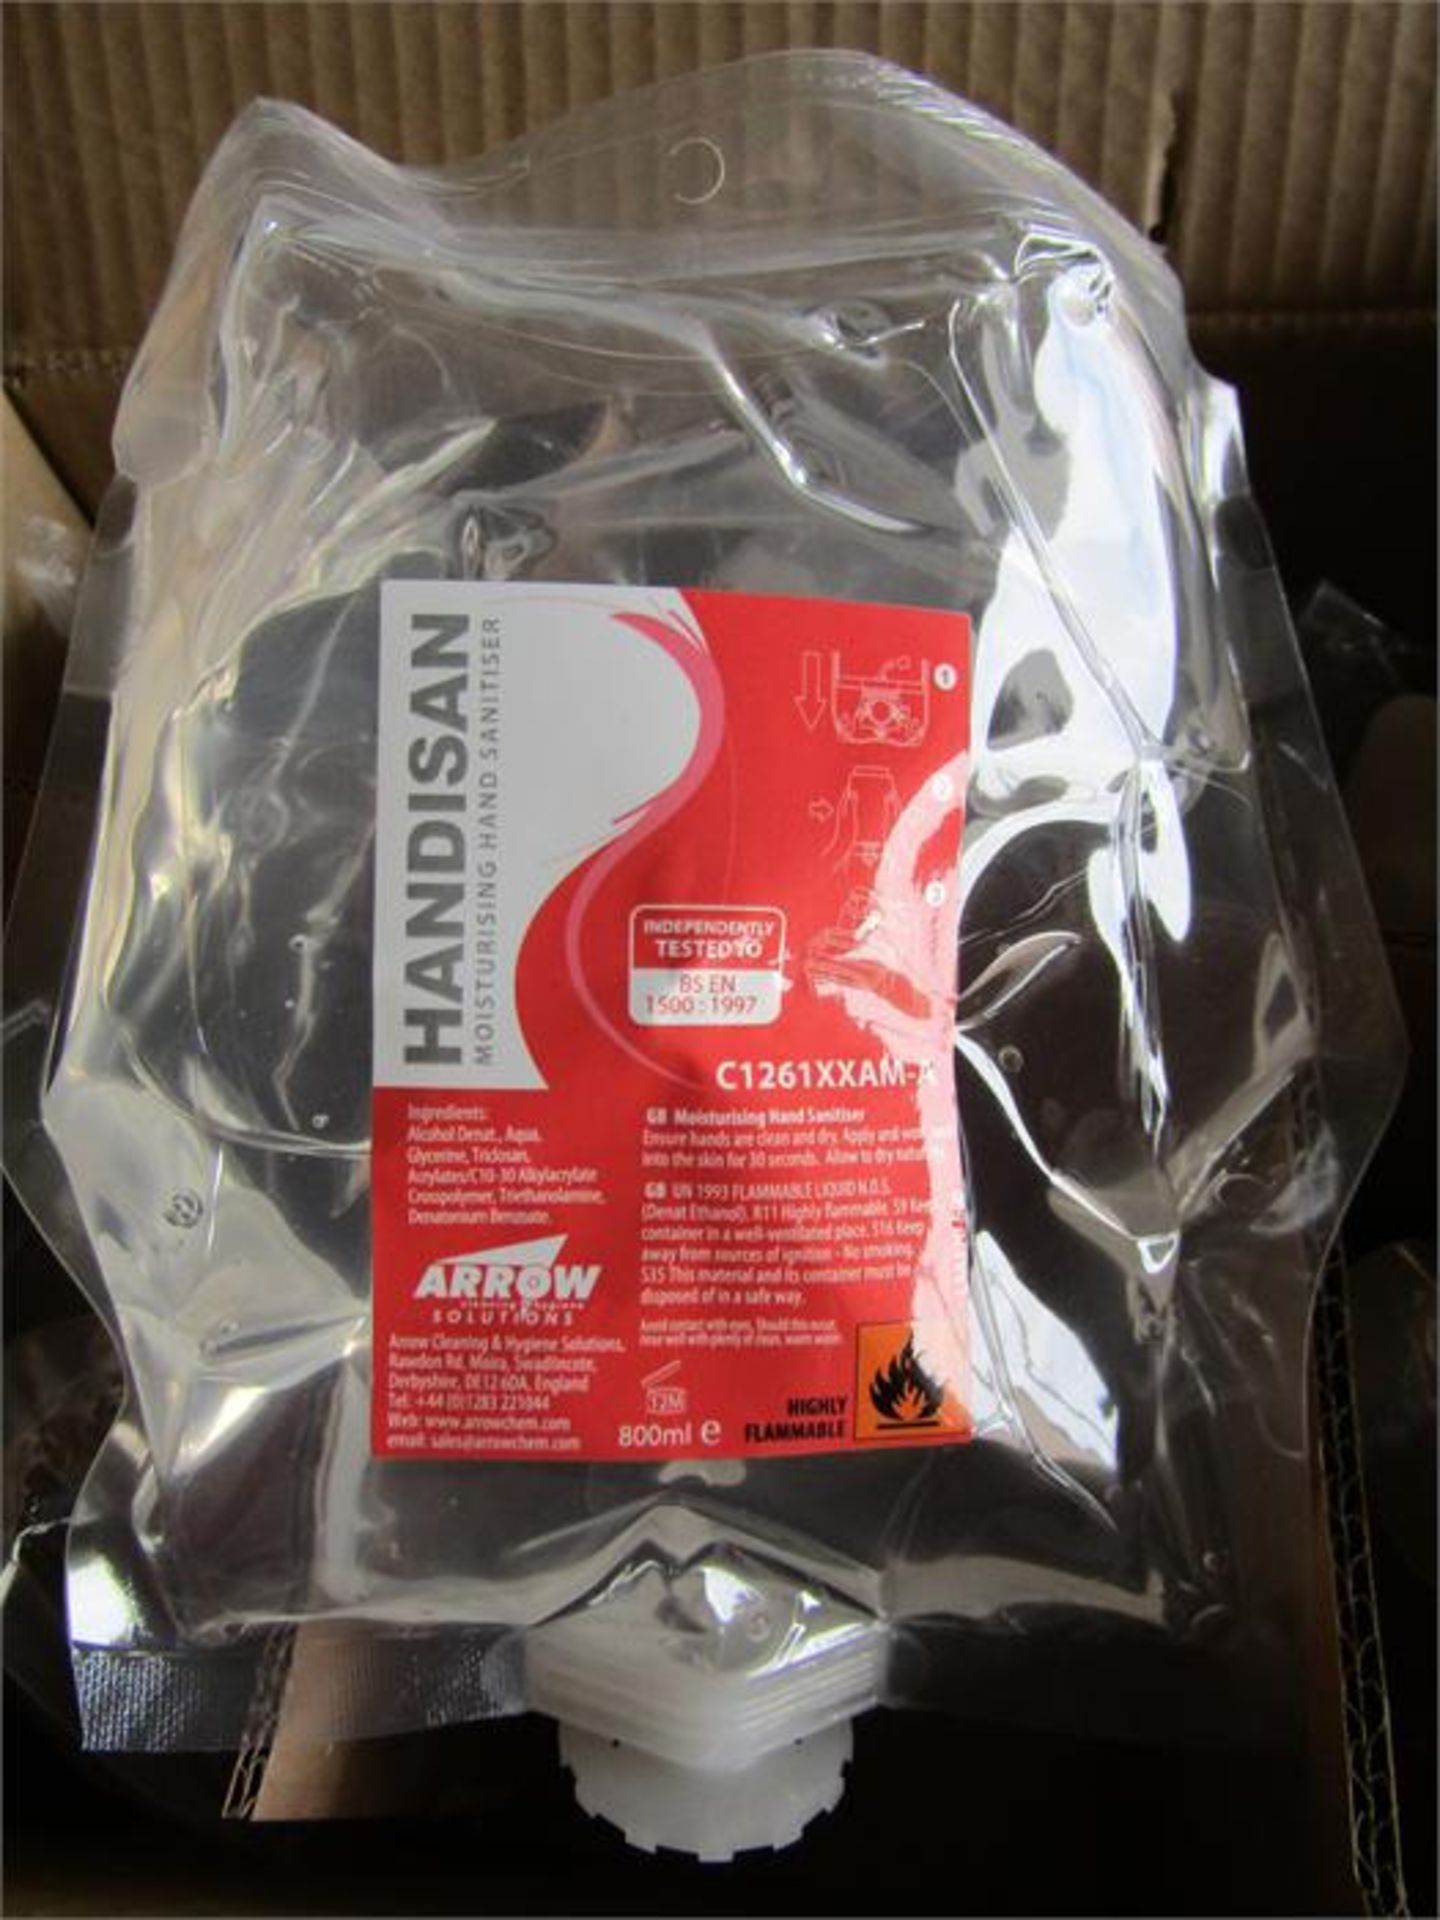 Box of 6 Arrow Hand Sanitiser Refills 800ml bags